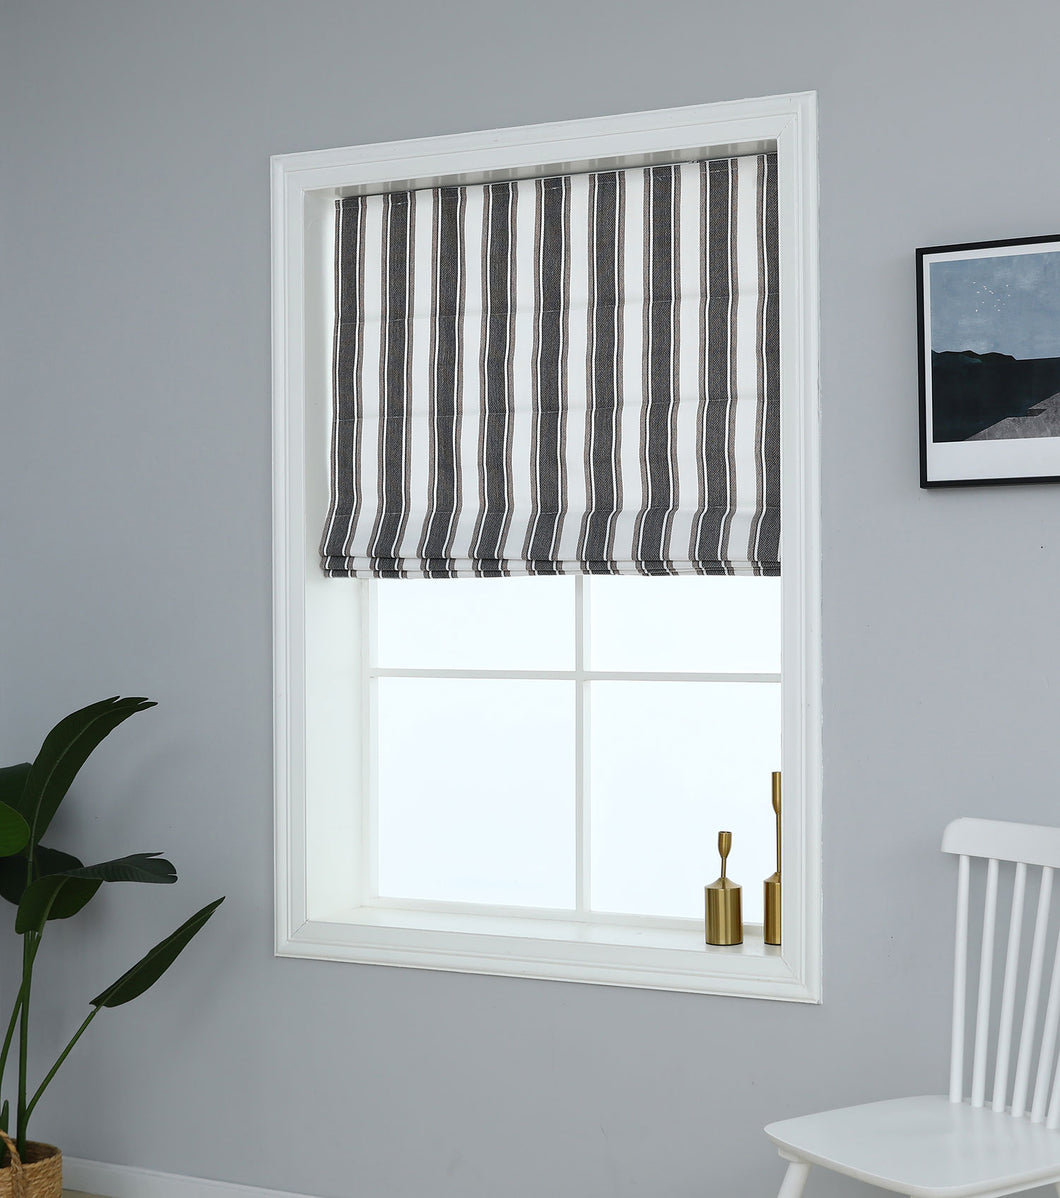 Yarn Dyed Cordless Roman Shades Blind, Vertical Stripe Room Darkening Window Shades